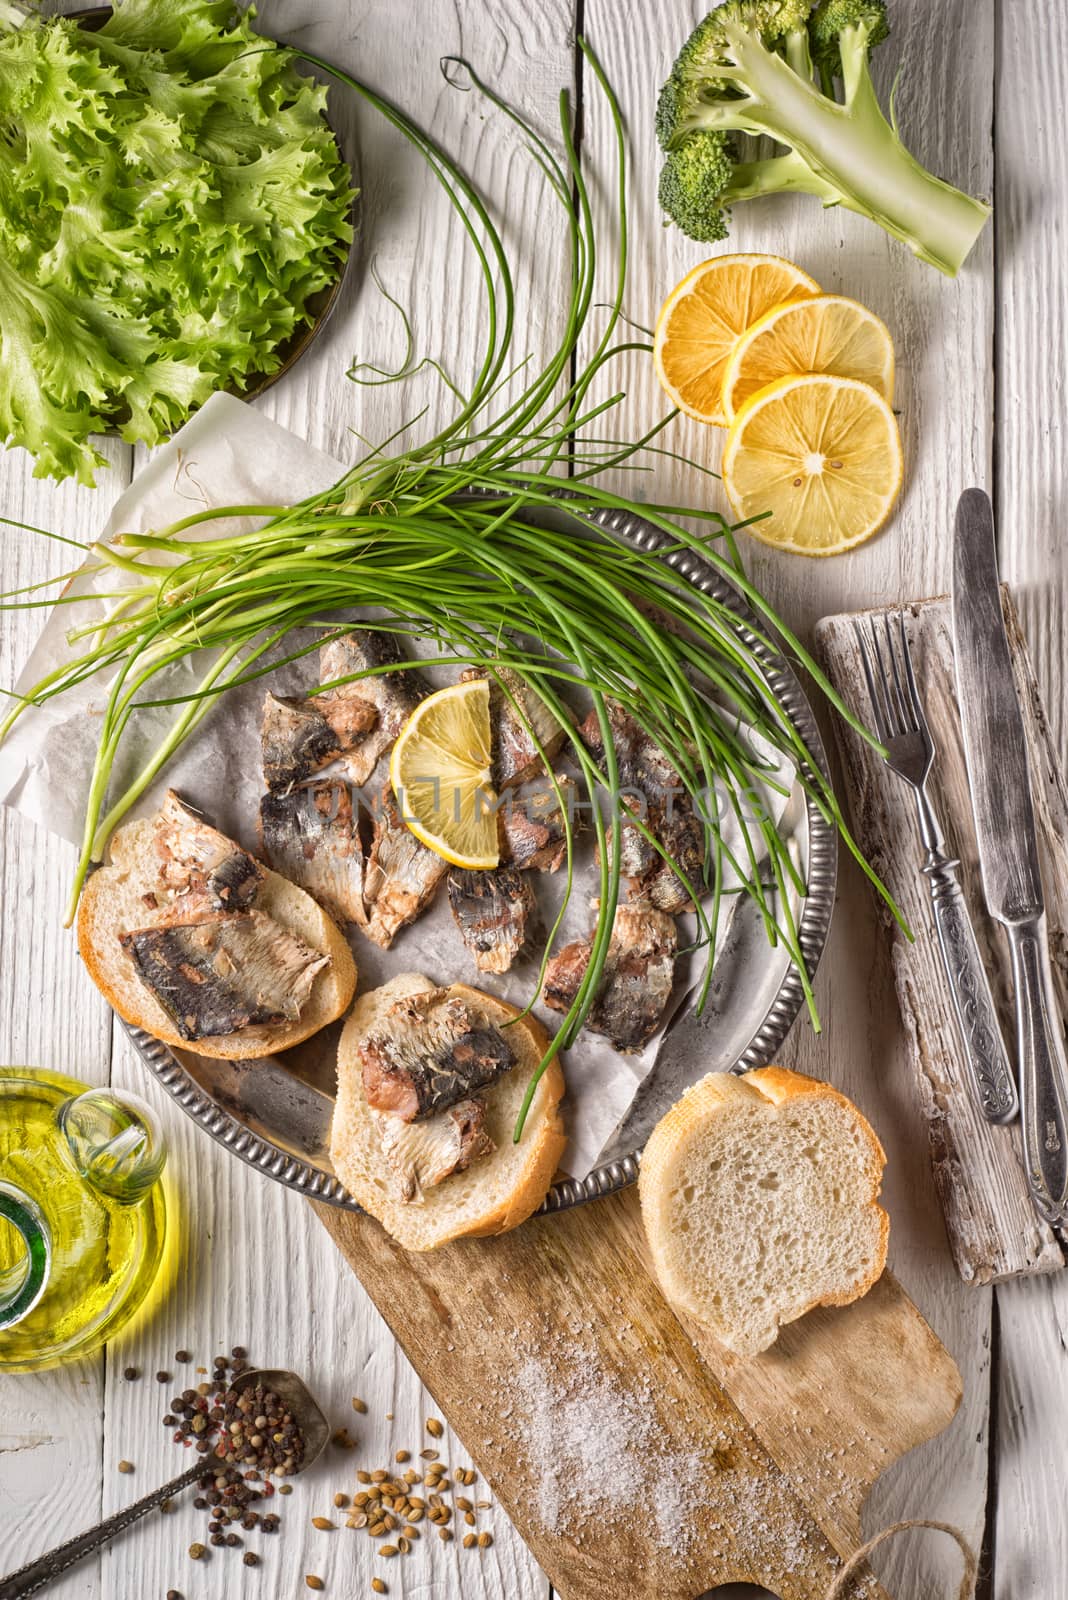 Fresh greens, sardines, bread on a wooden table by Deniskarpenkov